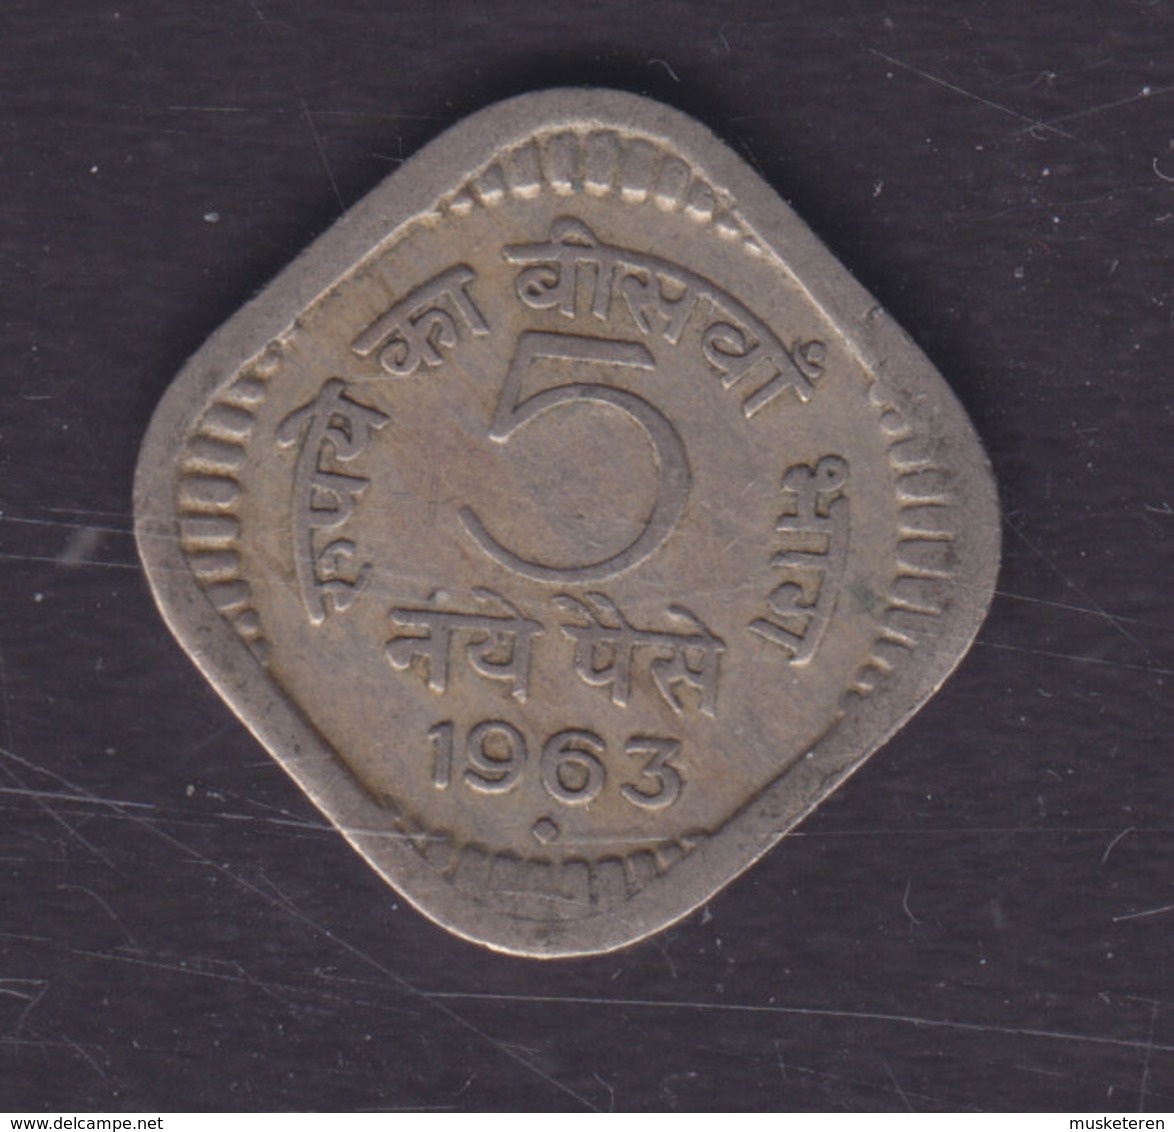 India 1963 5 Paise - India